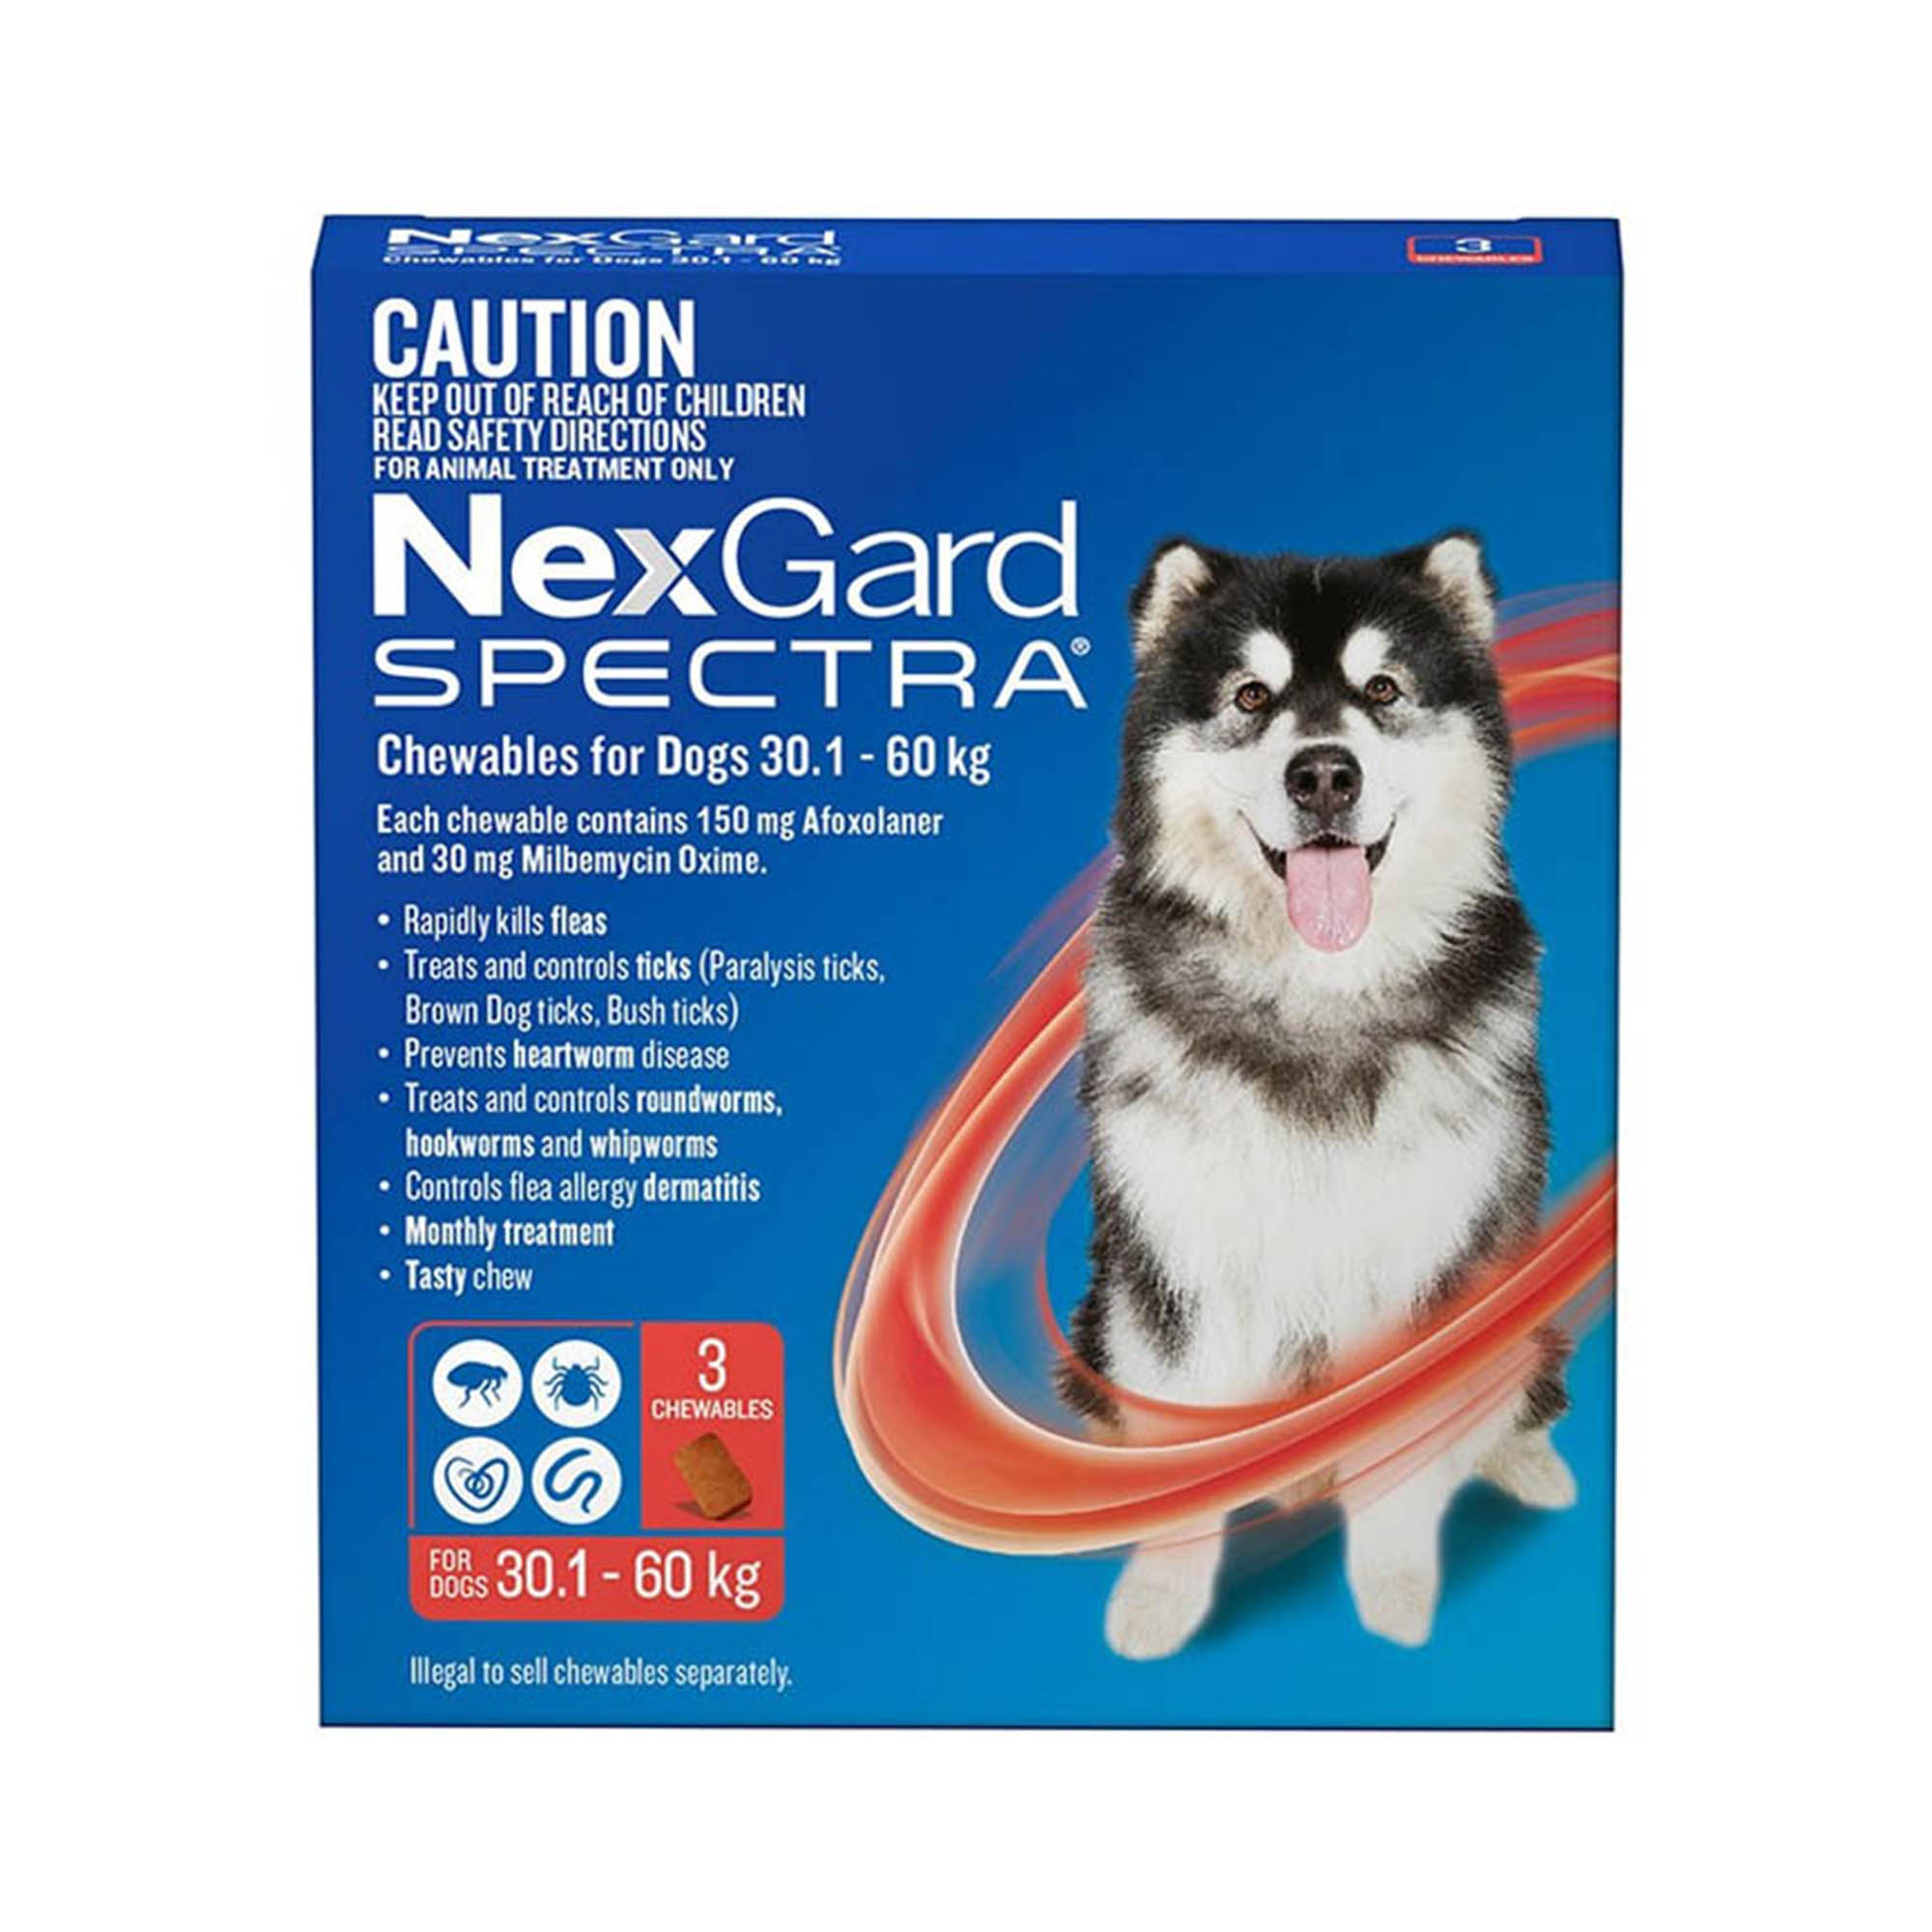 [1 viên] Nexgard Spectra cho chó từ 30.1 đến 60kg viên nhai trị ve, ghẻ, sổ giun